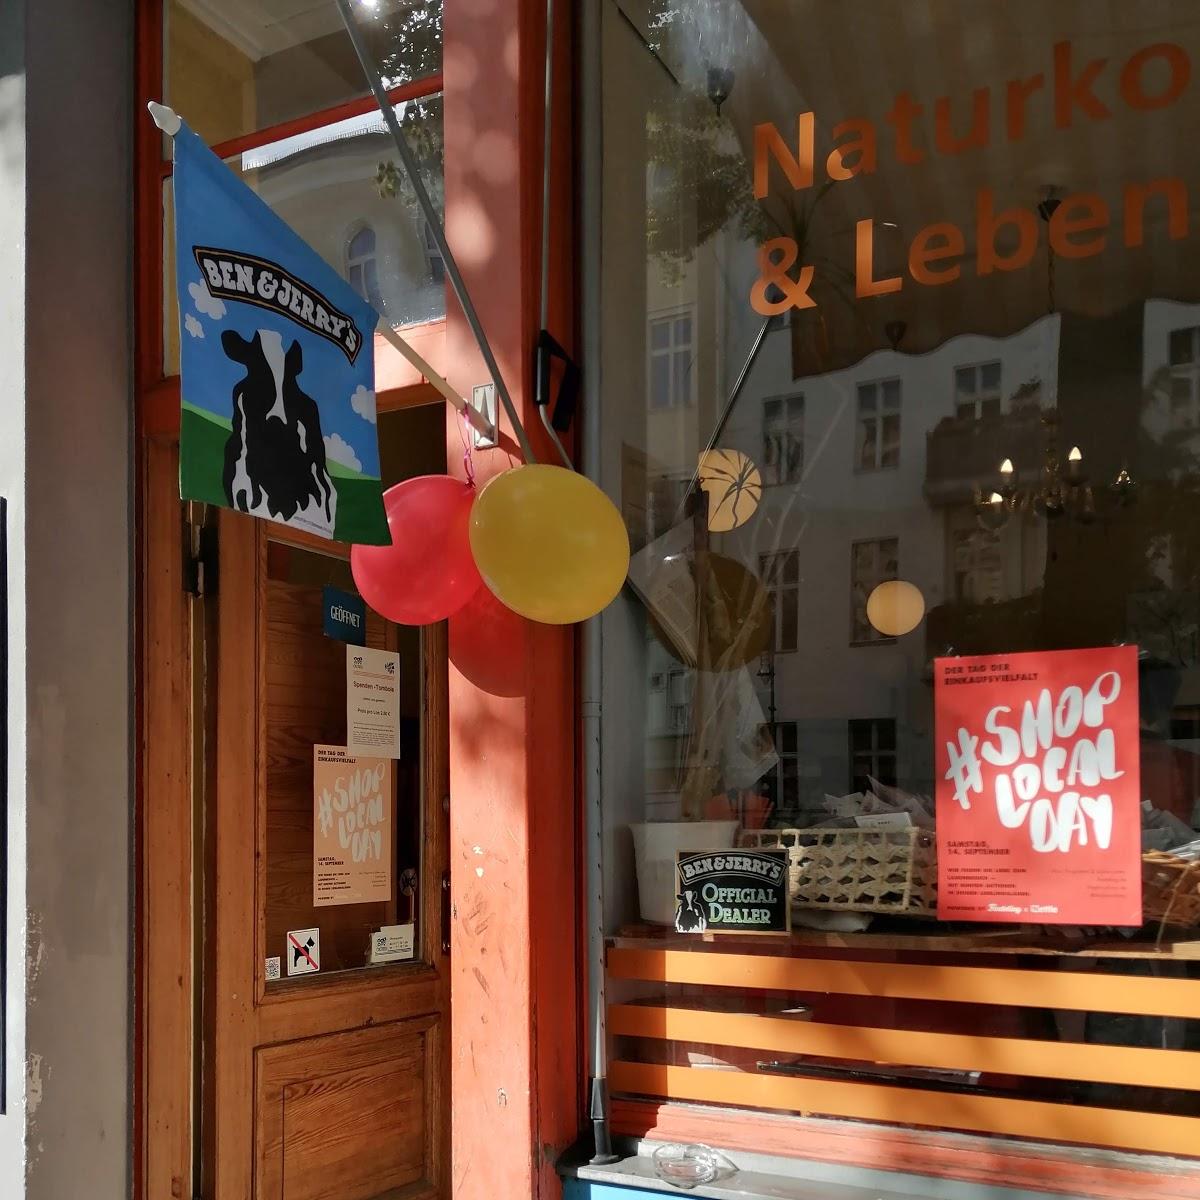 Restaurant "Ökotussi" in Berlin